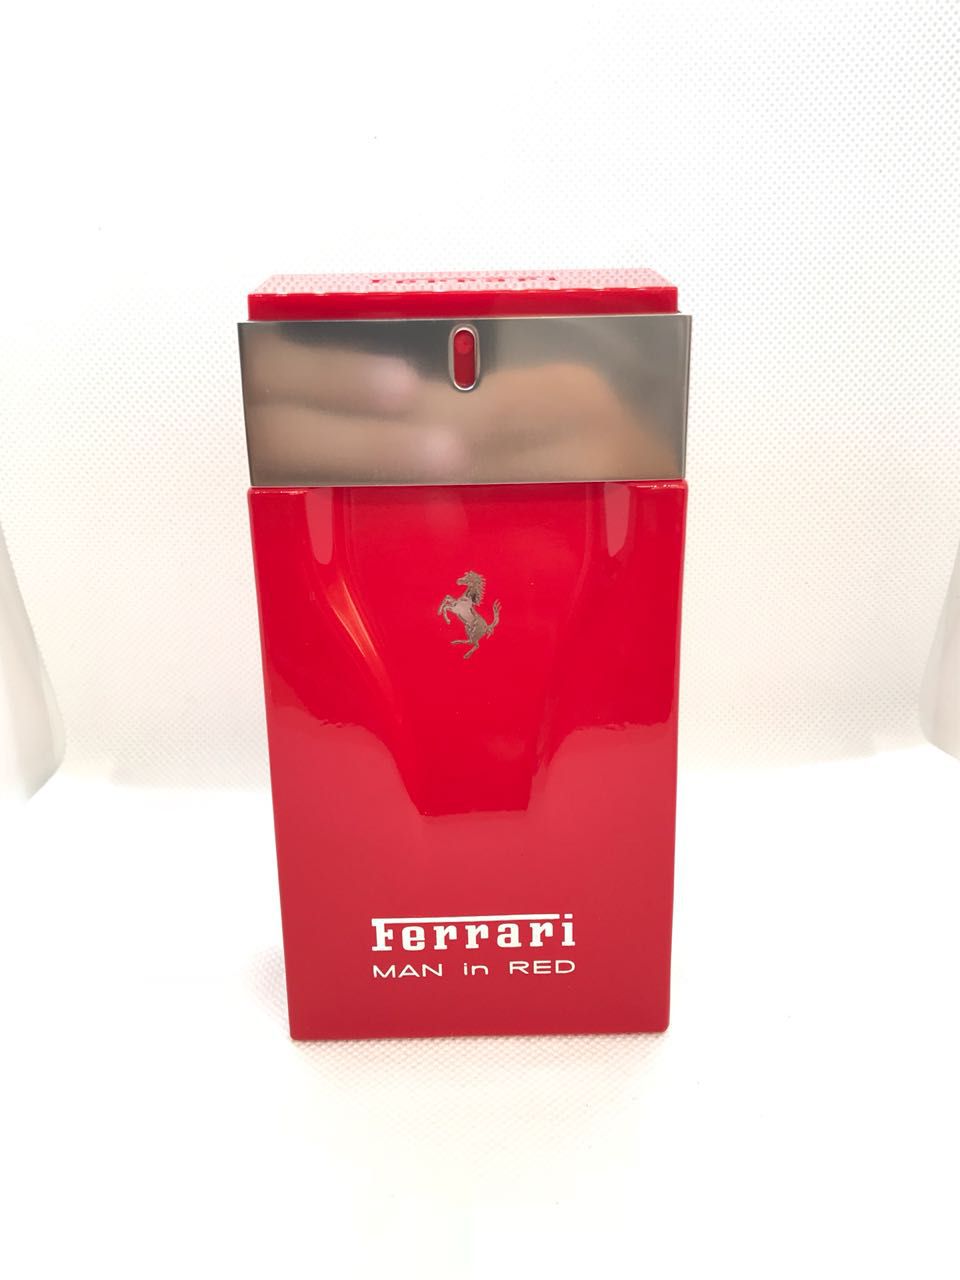 Man In Red Ferrari Masculino Eau de Toilette 100ML - Tester